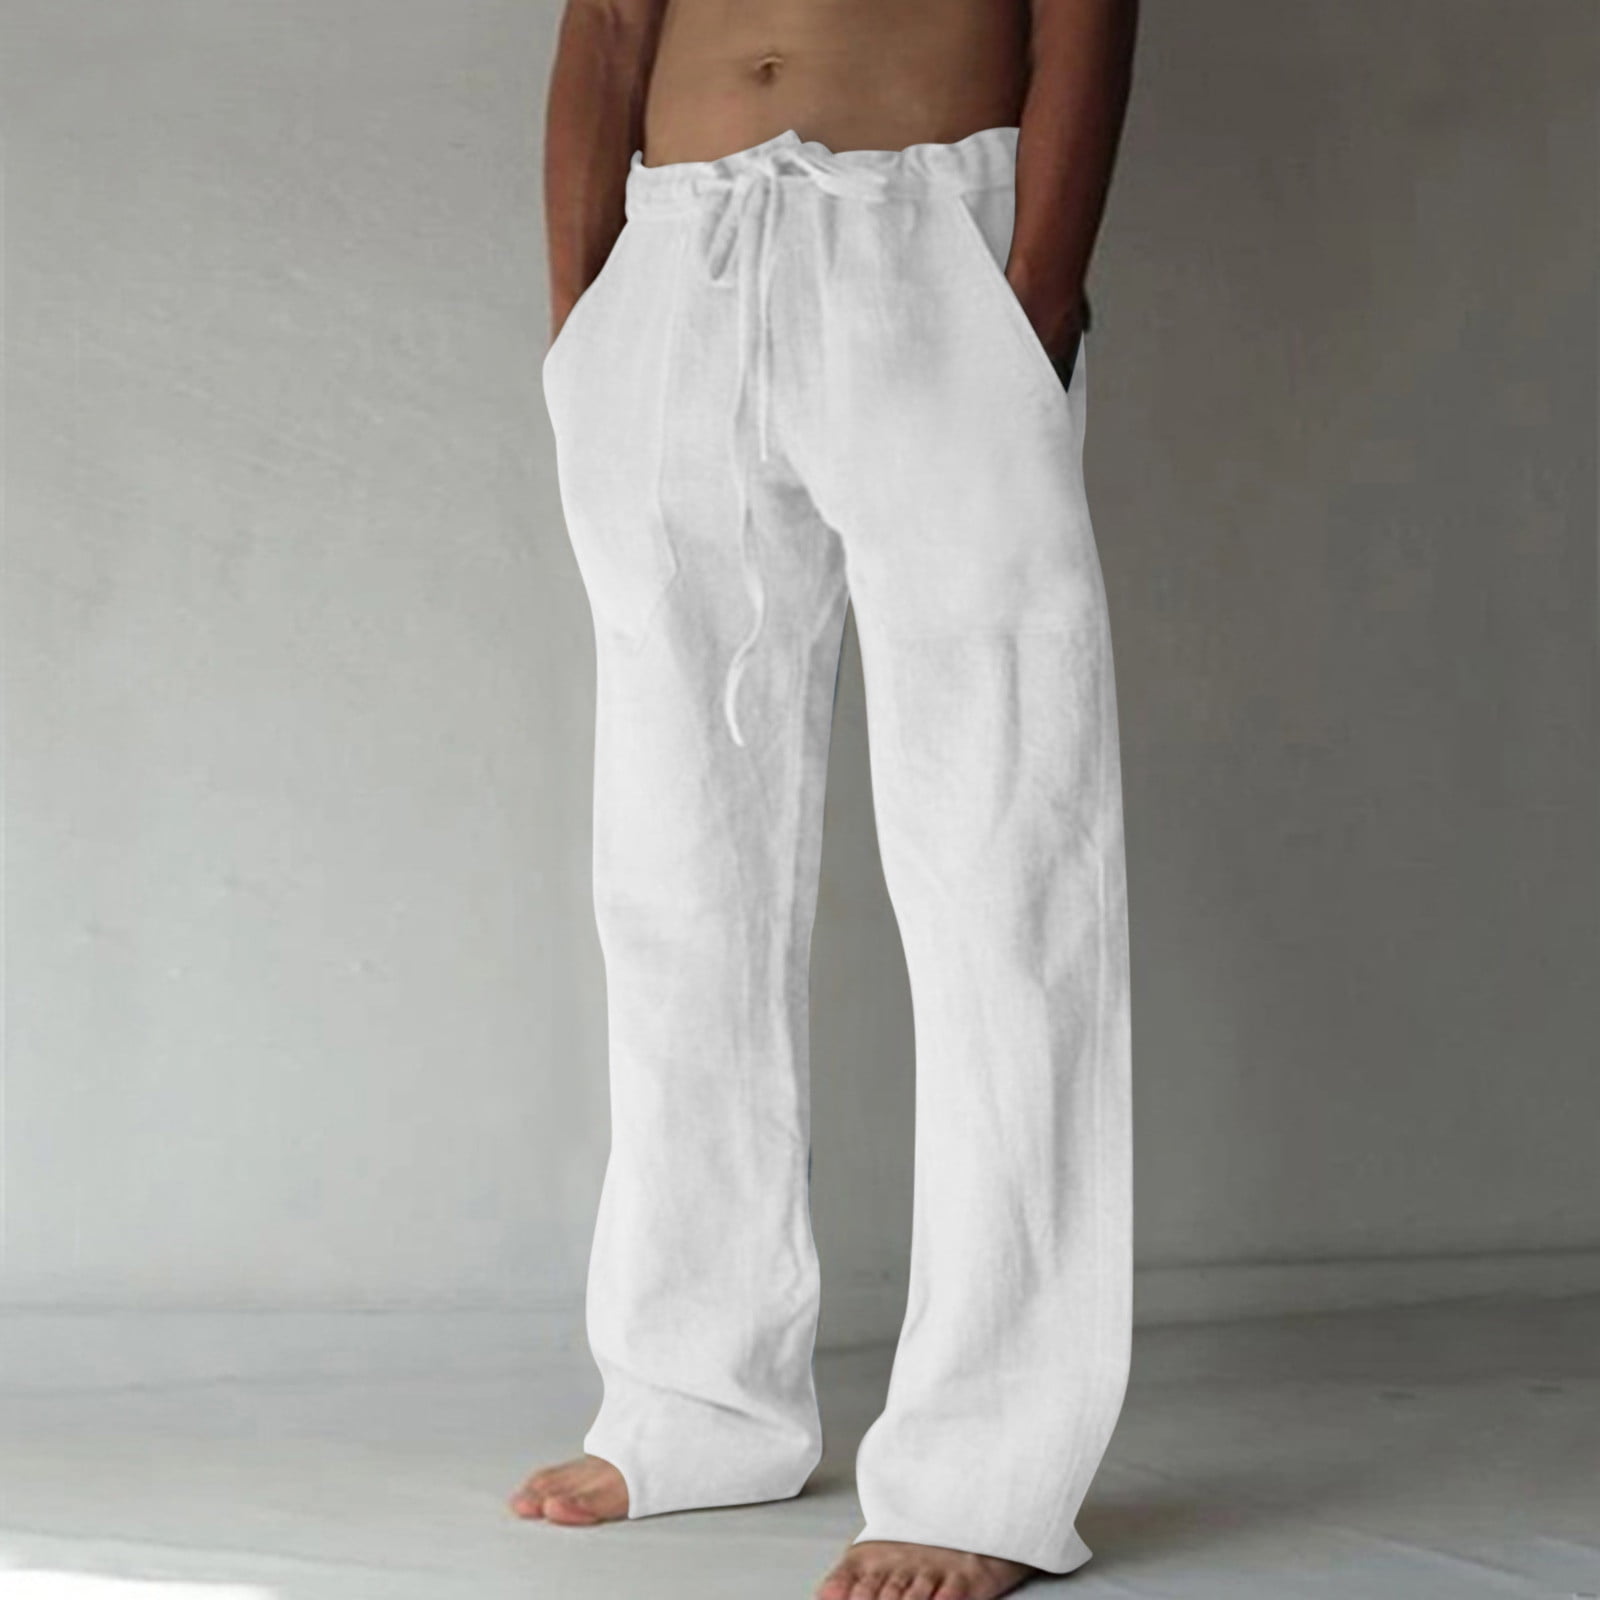 Dgoopd Men's Cotton Linen Pants Casual Elastic Waist Drawstring Pants  Straight Leg Yoga Pants Lightweight Summer